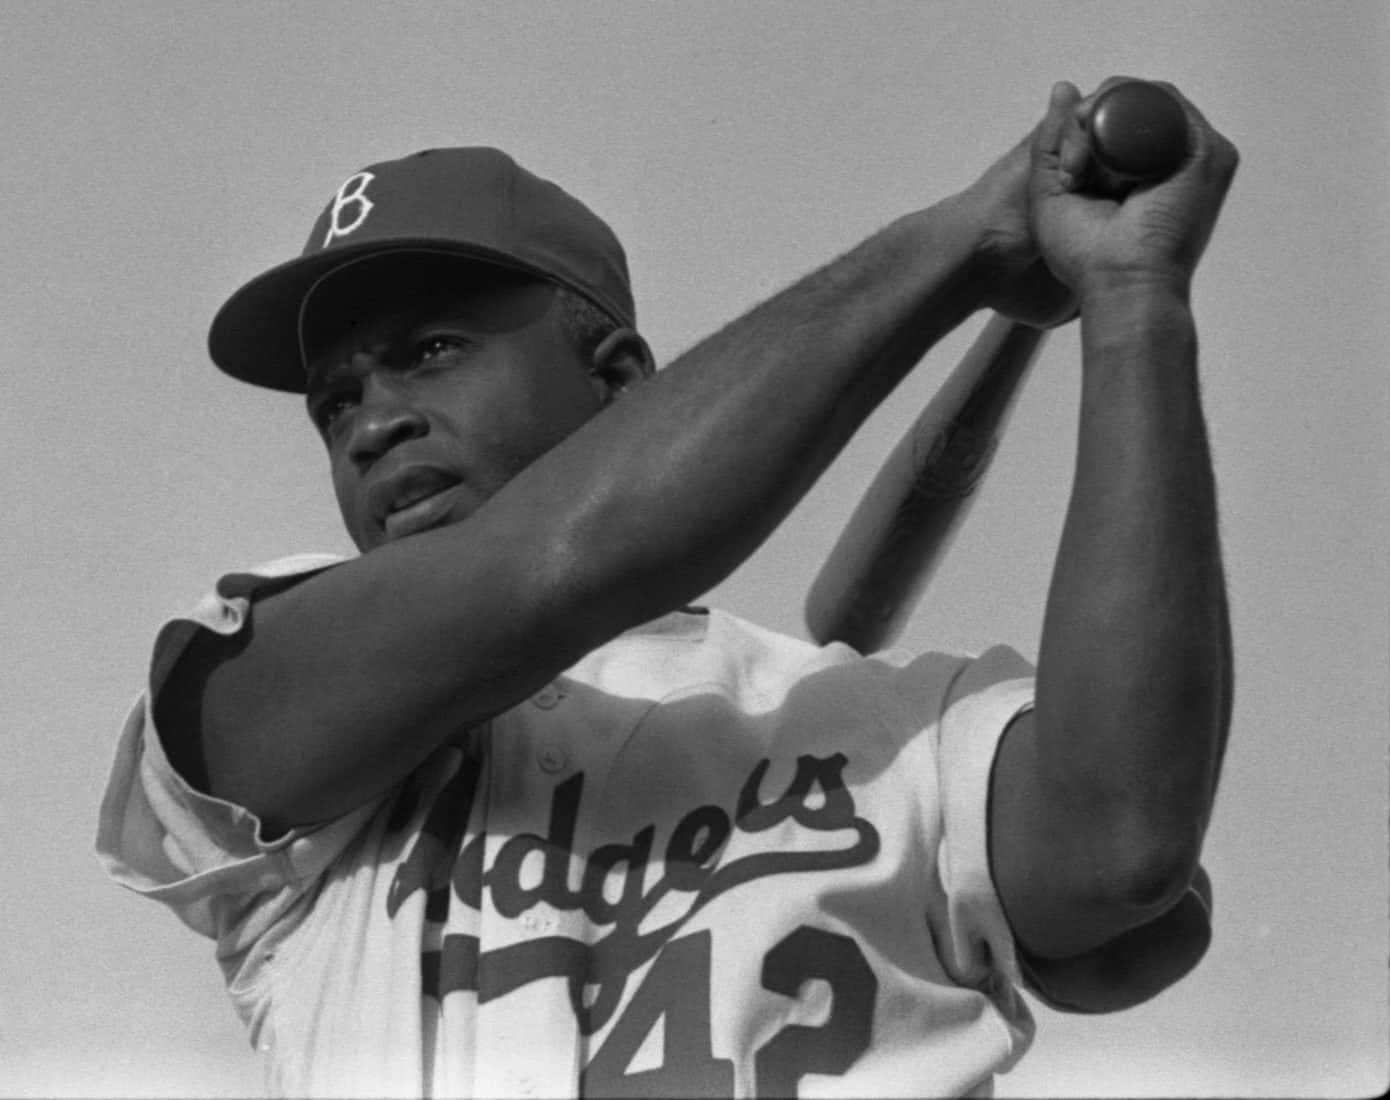 Baseball legend, Jackie Robinson